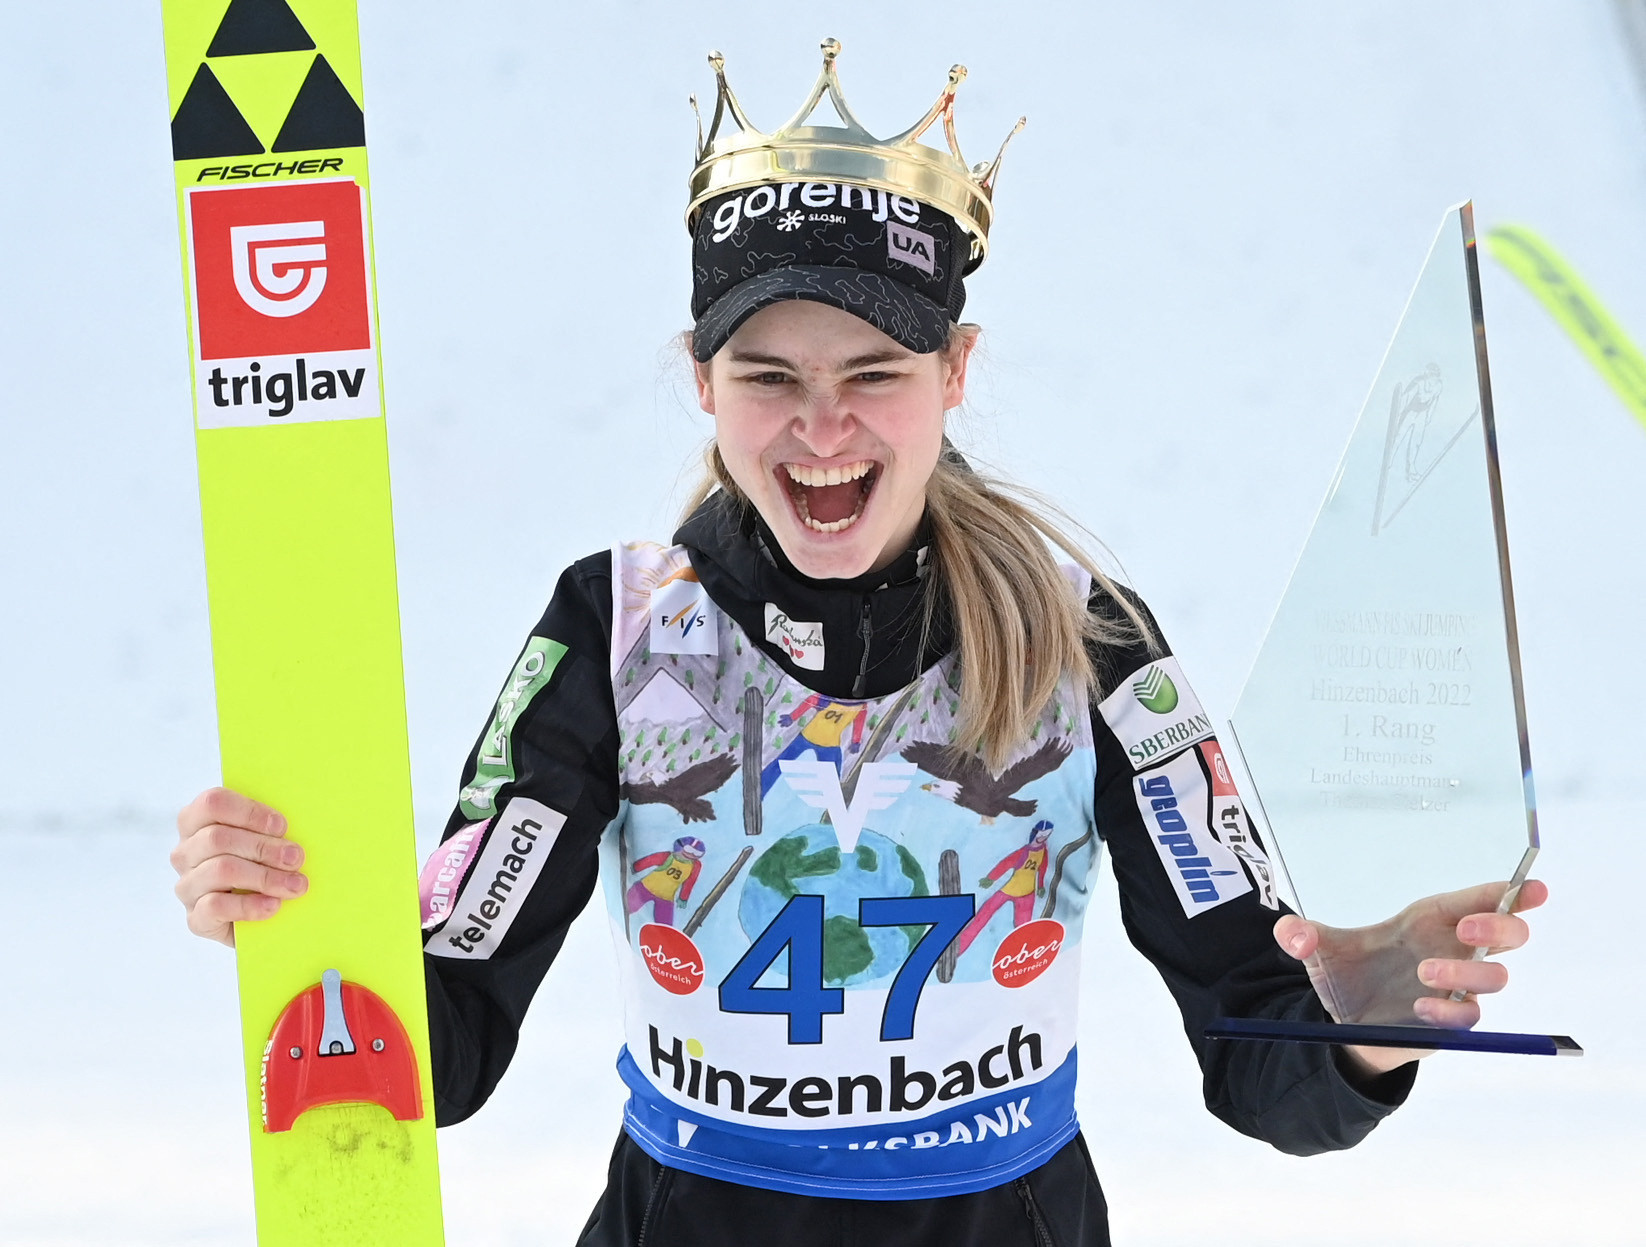 Slovenian Križnar wins Ski Jumping World Cup in Hinzenbach